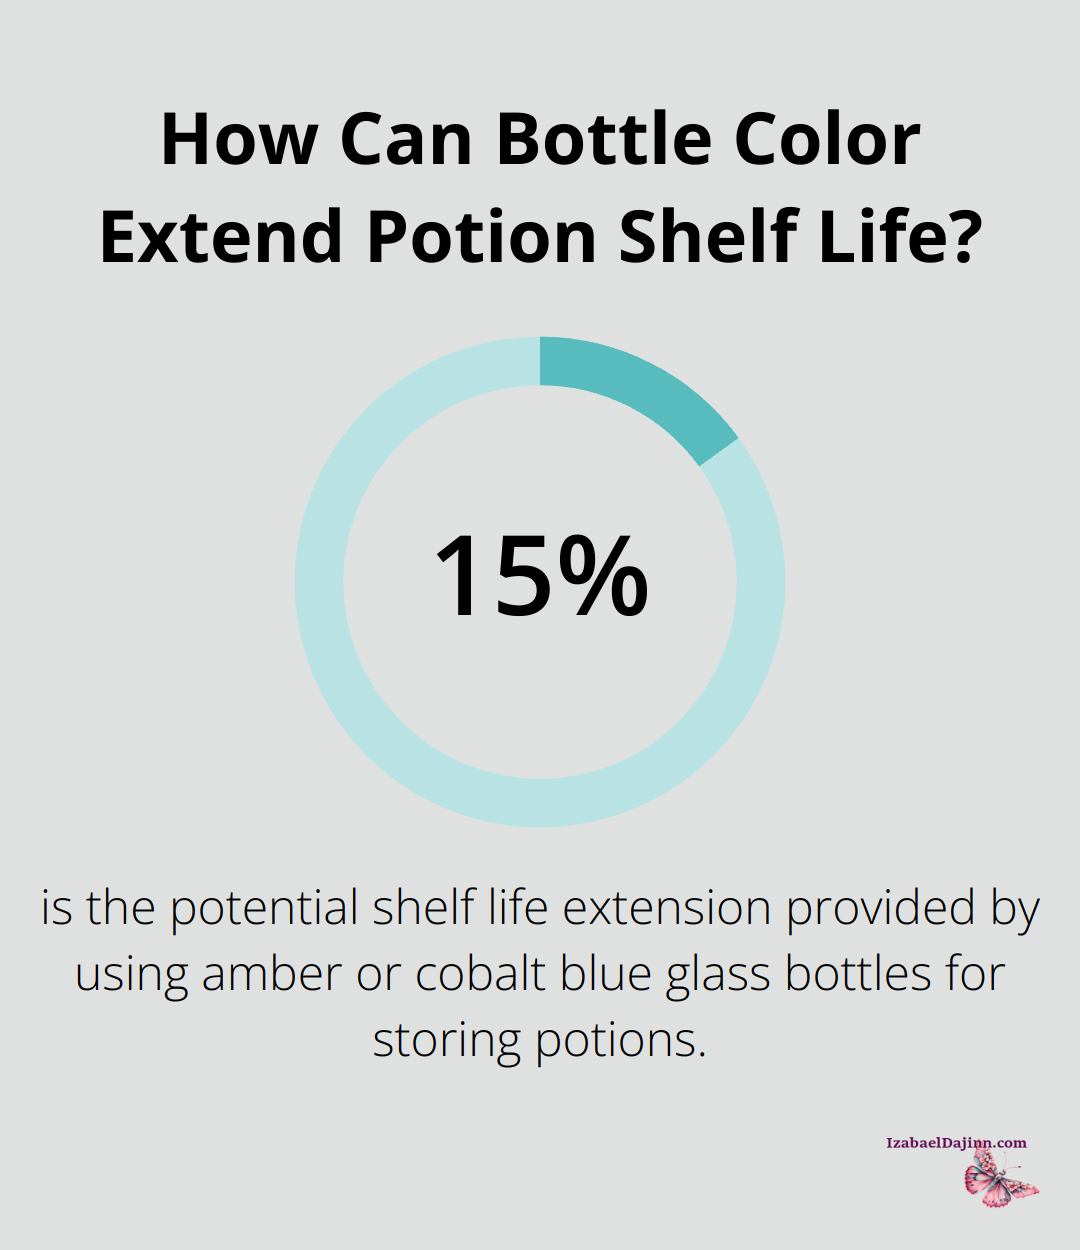 How Can Bottle Color Extend Potion Shelf Life?